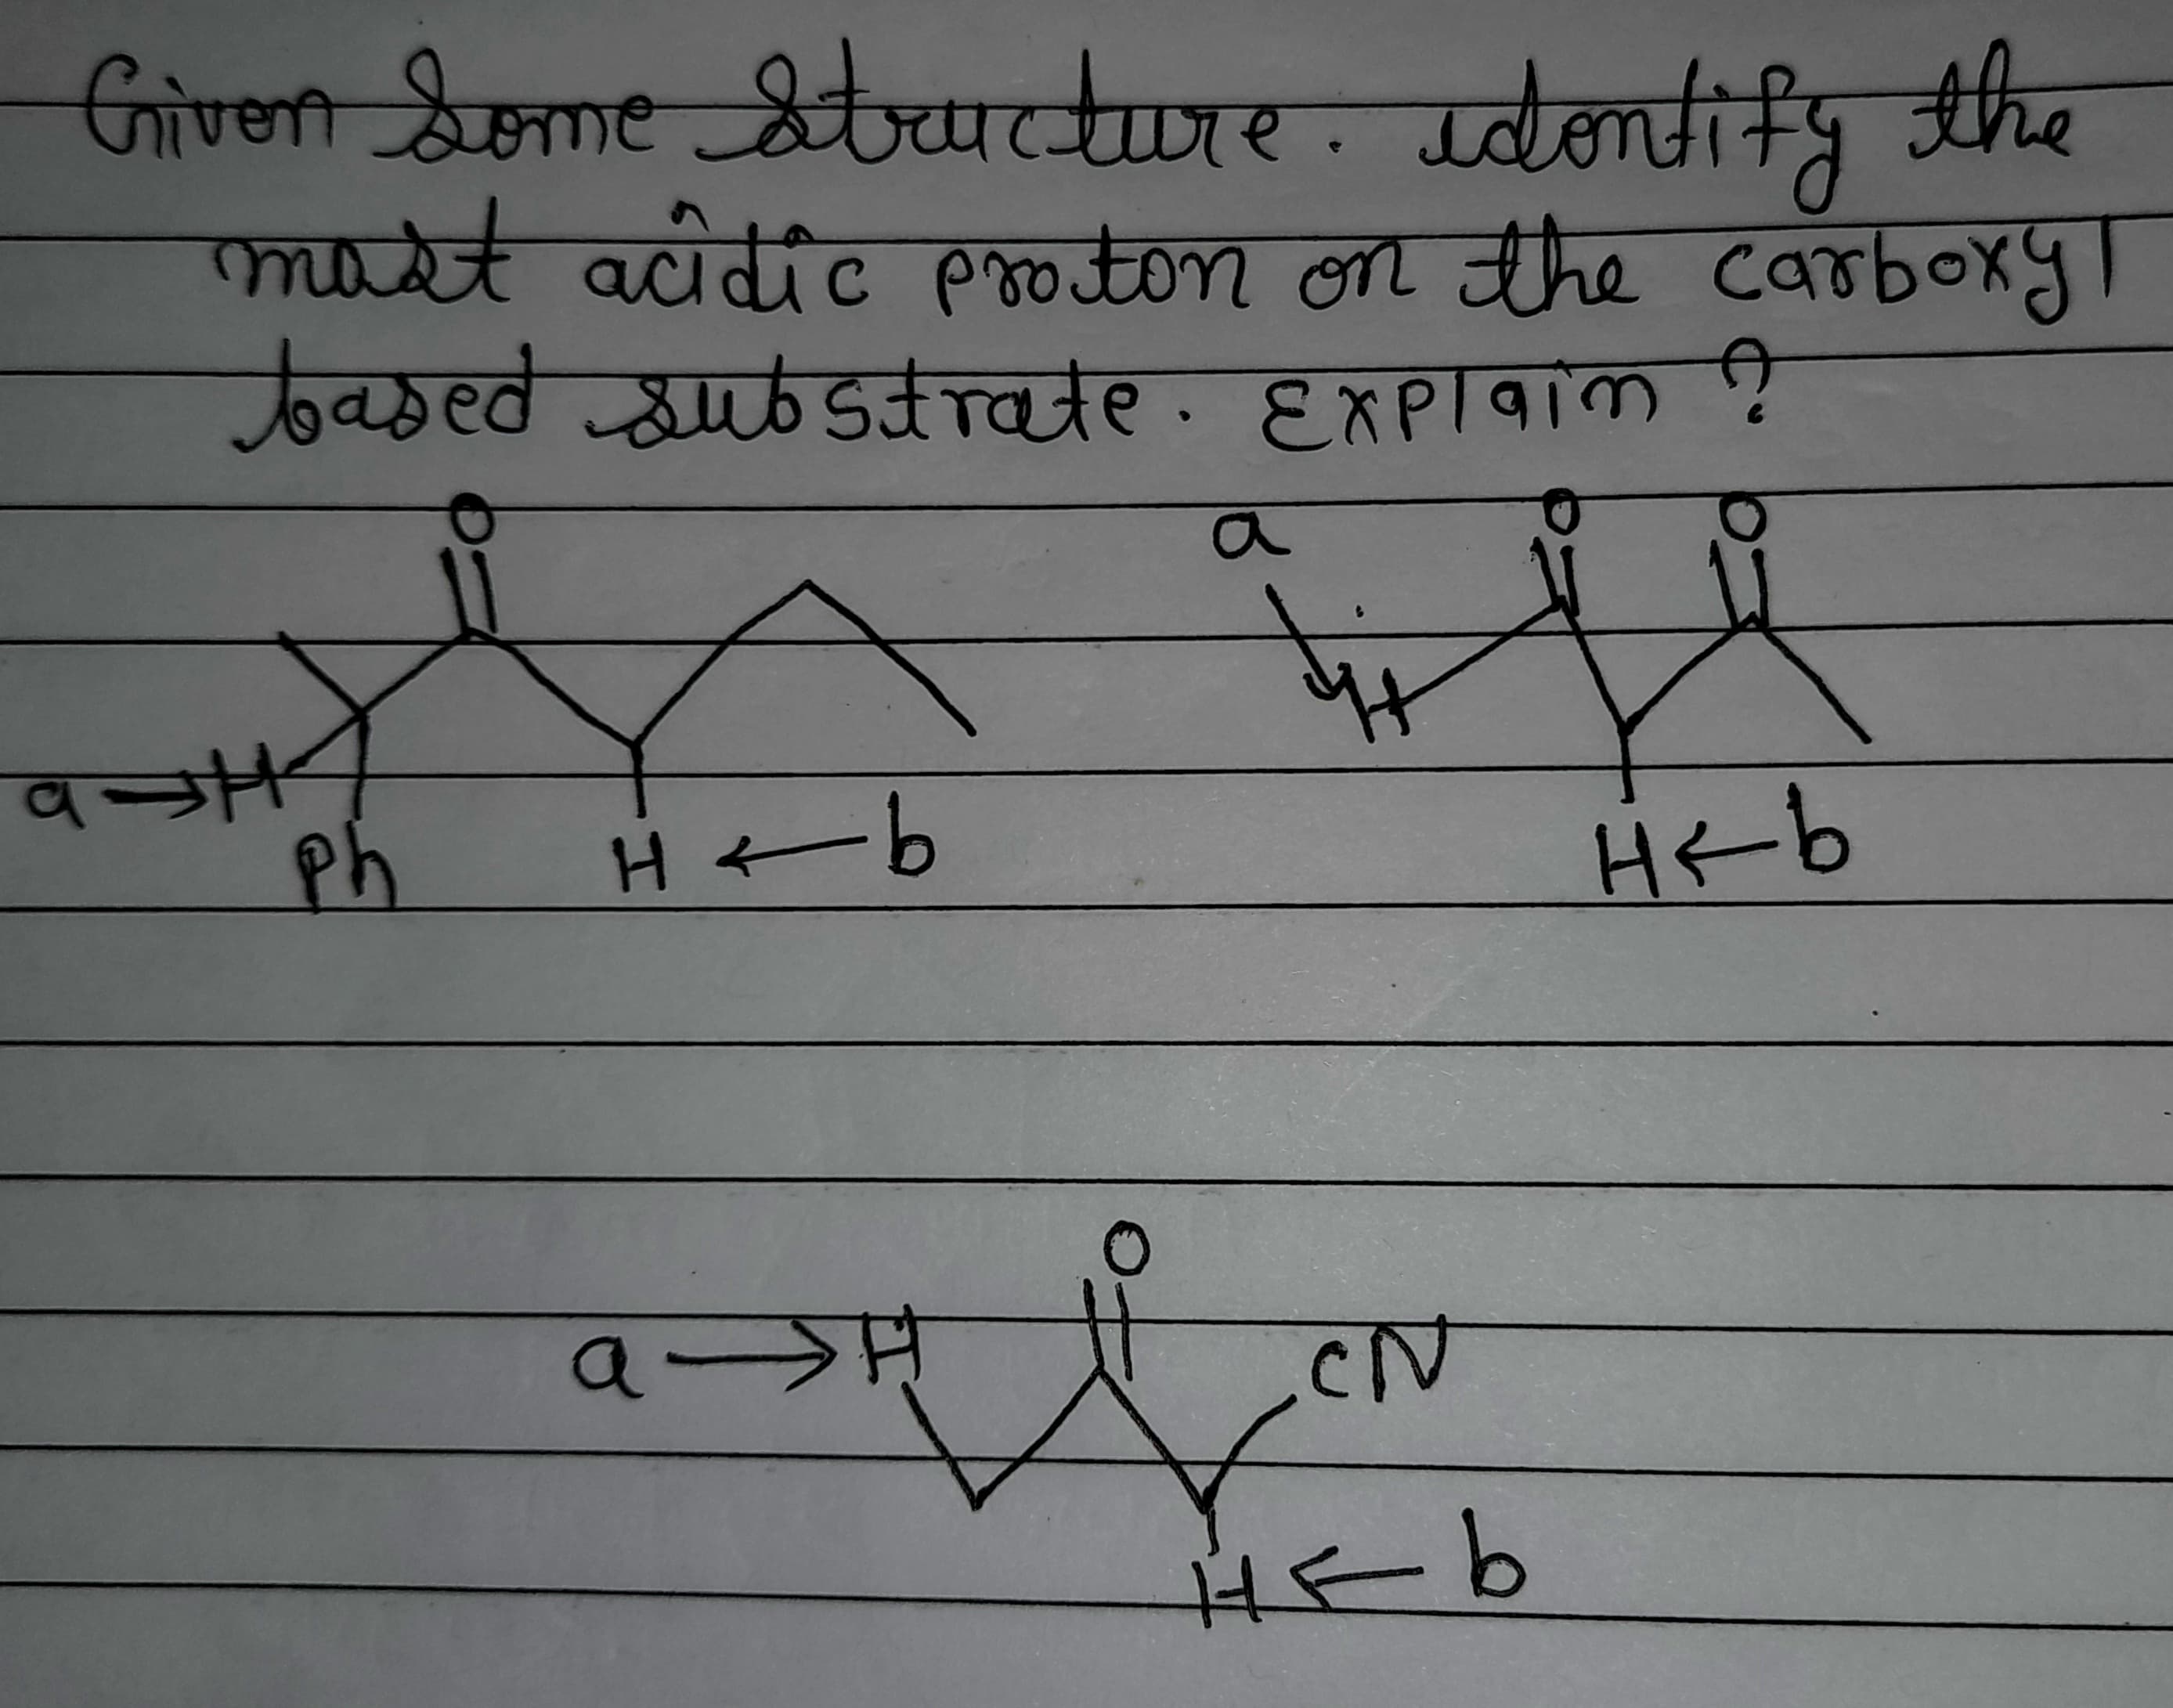 Griven Some Stucture. idontifg the
att l
acidic proton on the caboxy
एक्र्व शड हतराबाक ?
Ph
Heb
a-
HEb
